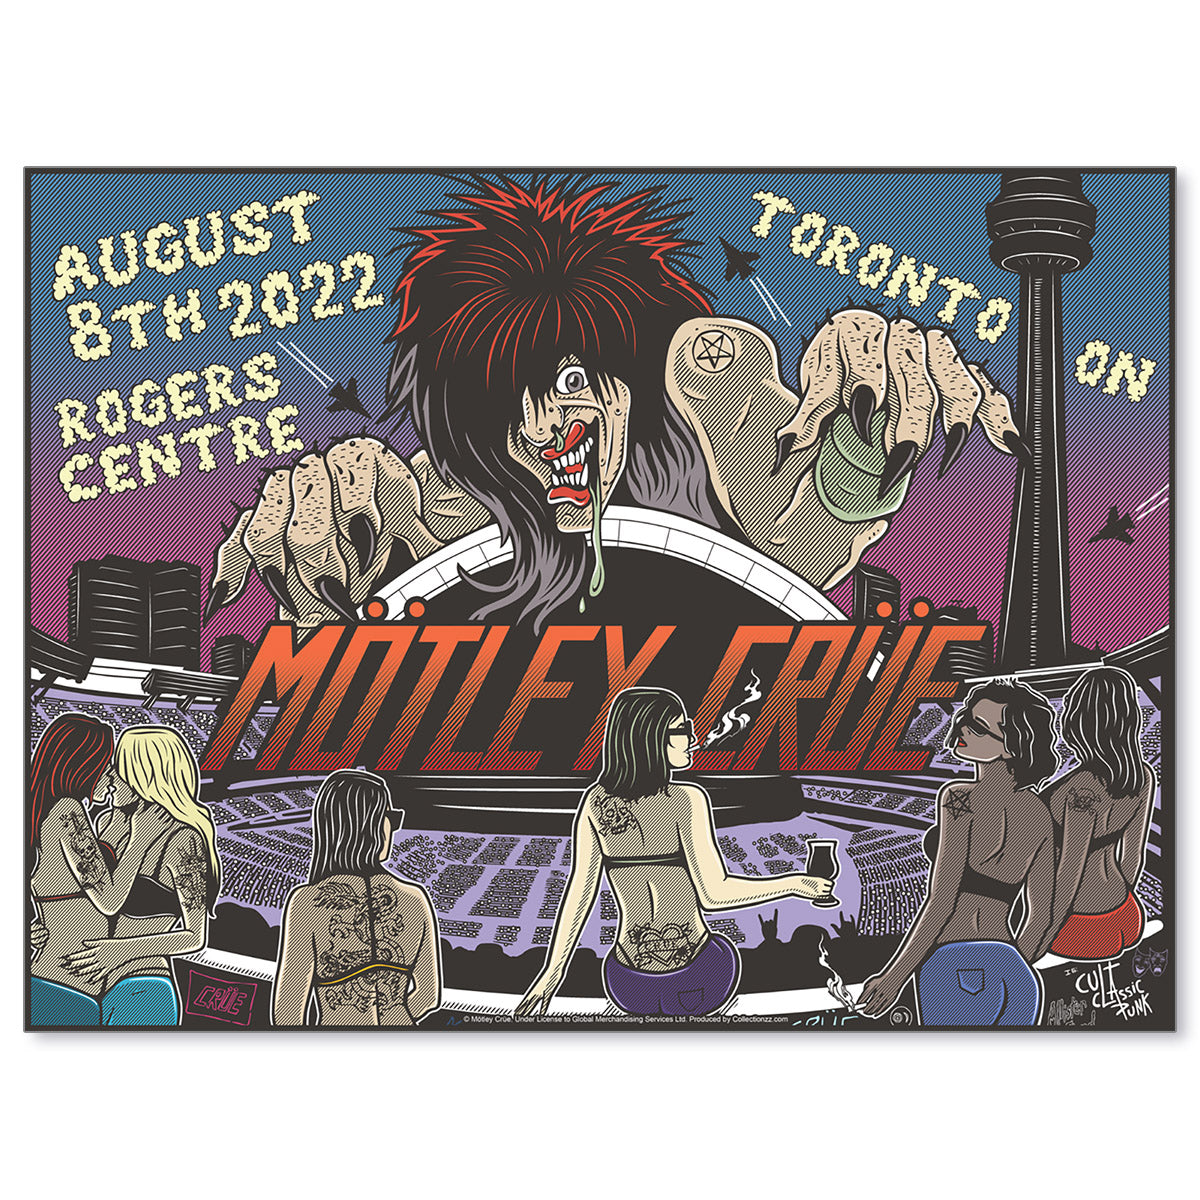 Mötley Crüe Toronto August 8, 2022 The Stadium Tour